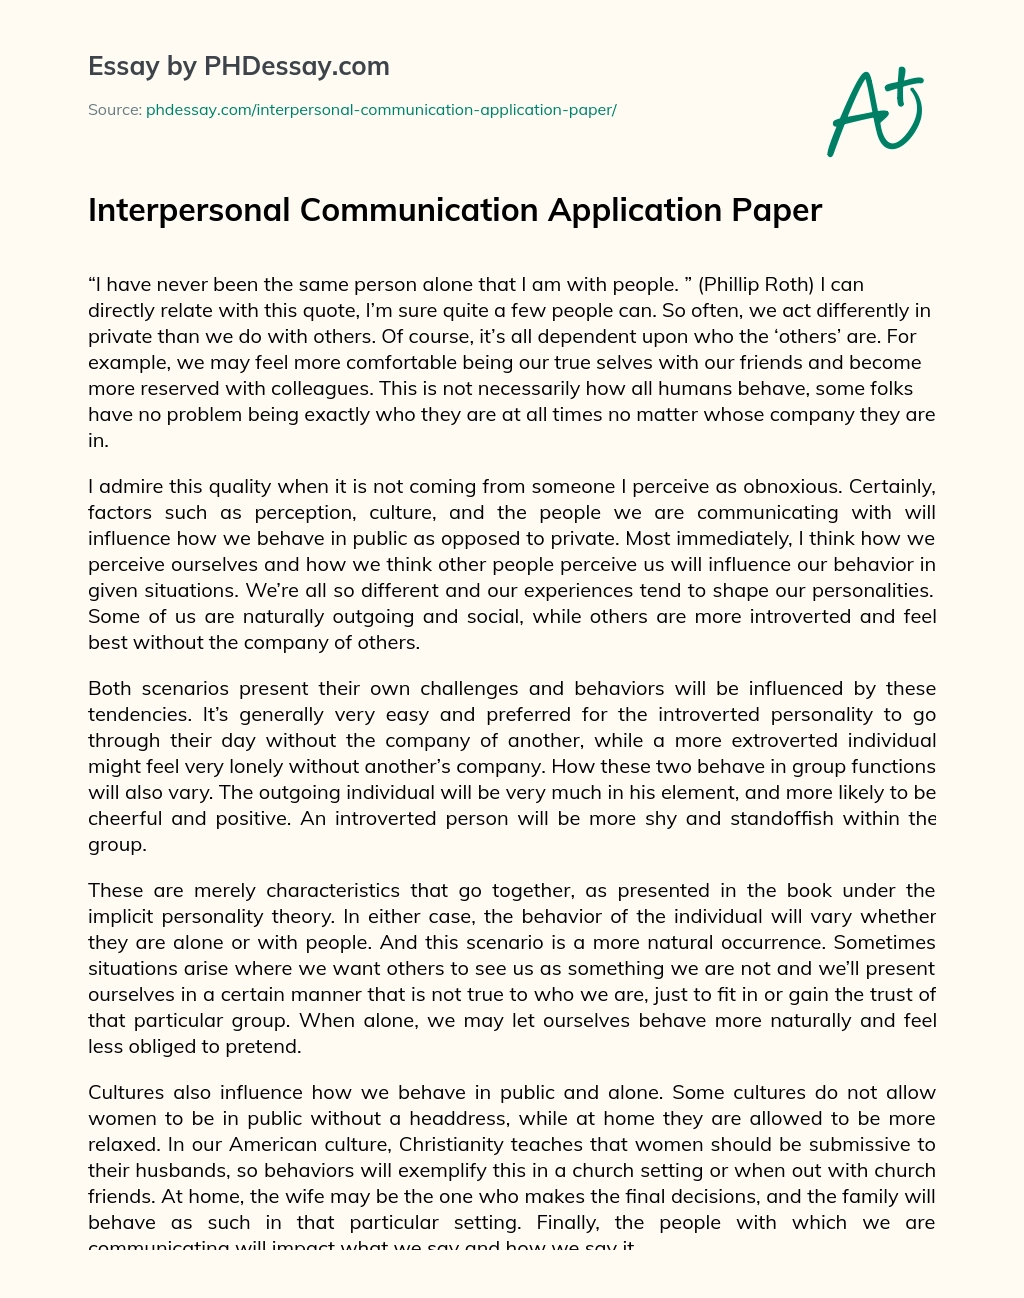 Interpersonal Communication Application Paper essay